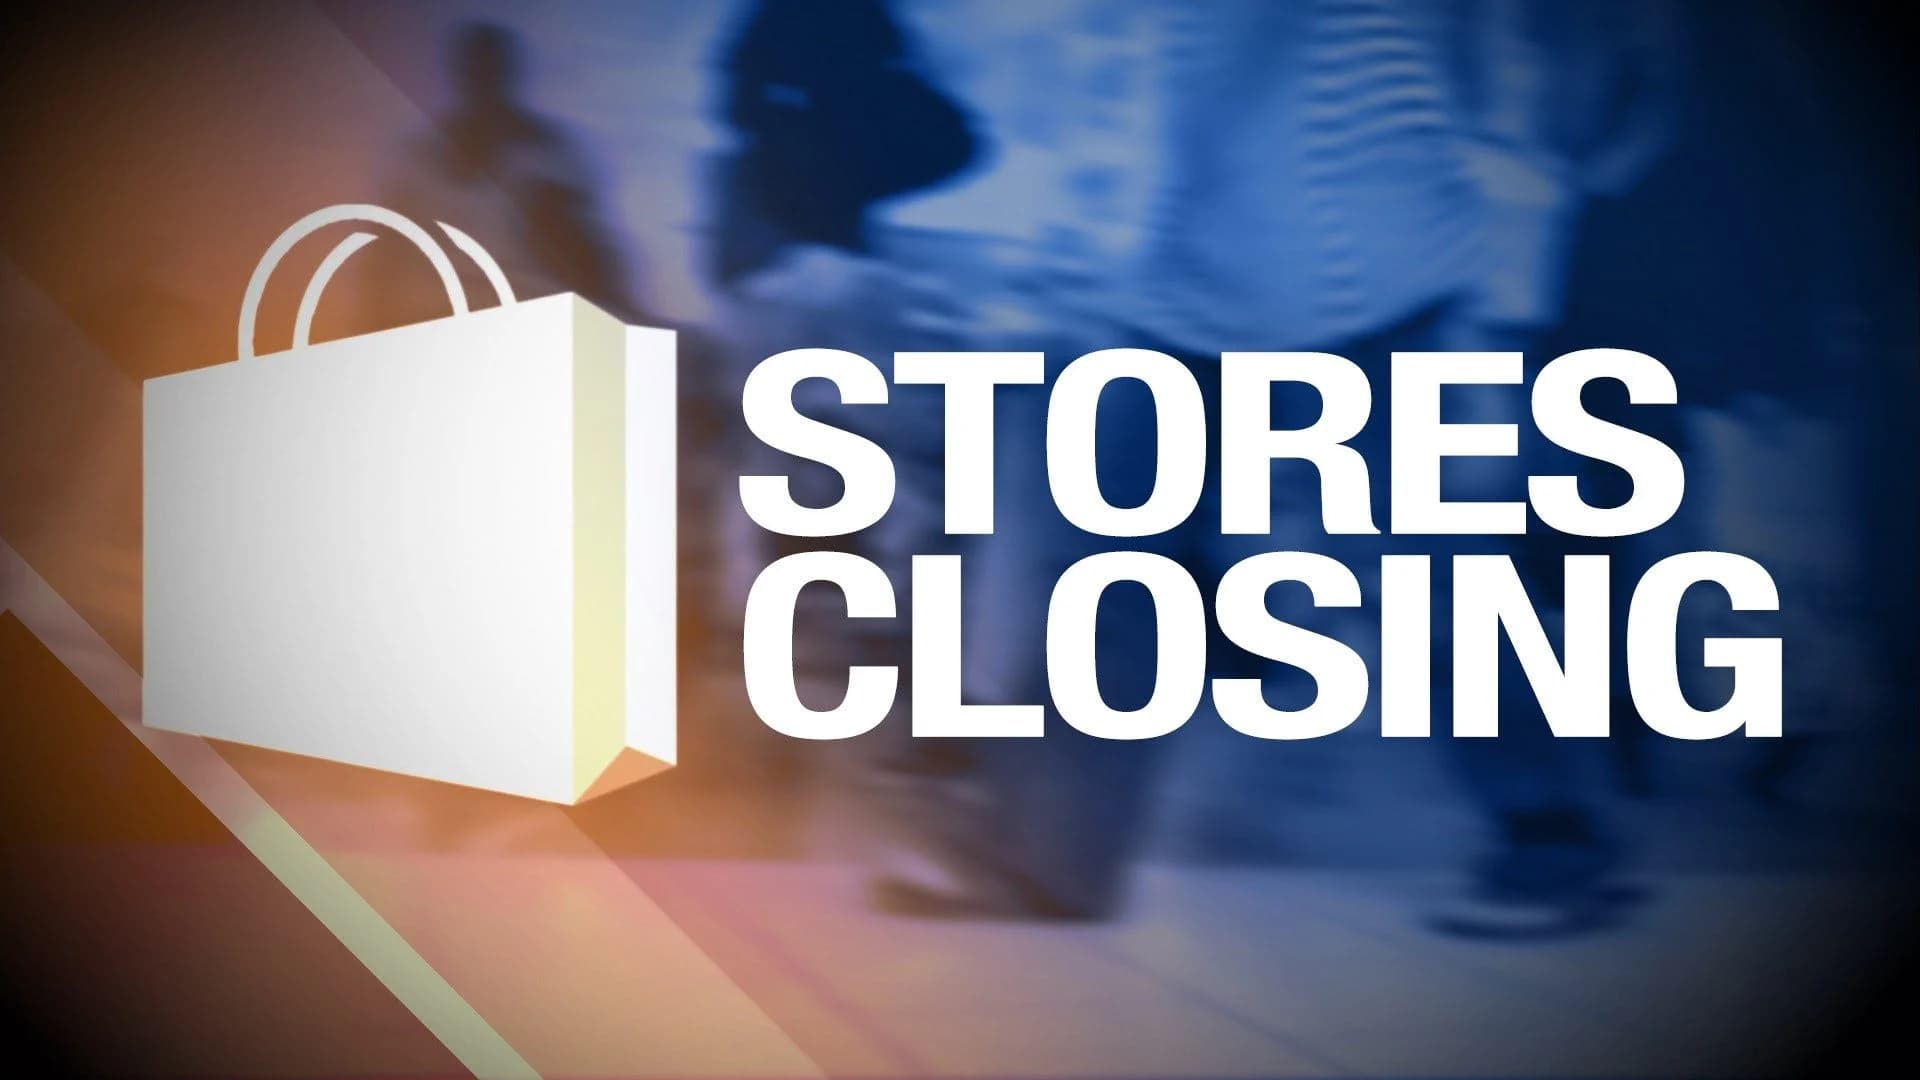 Gap Inc., Victoria’s Secret among retailers set to close stores